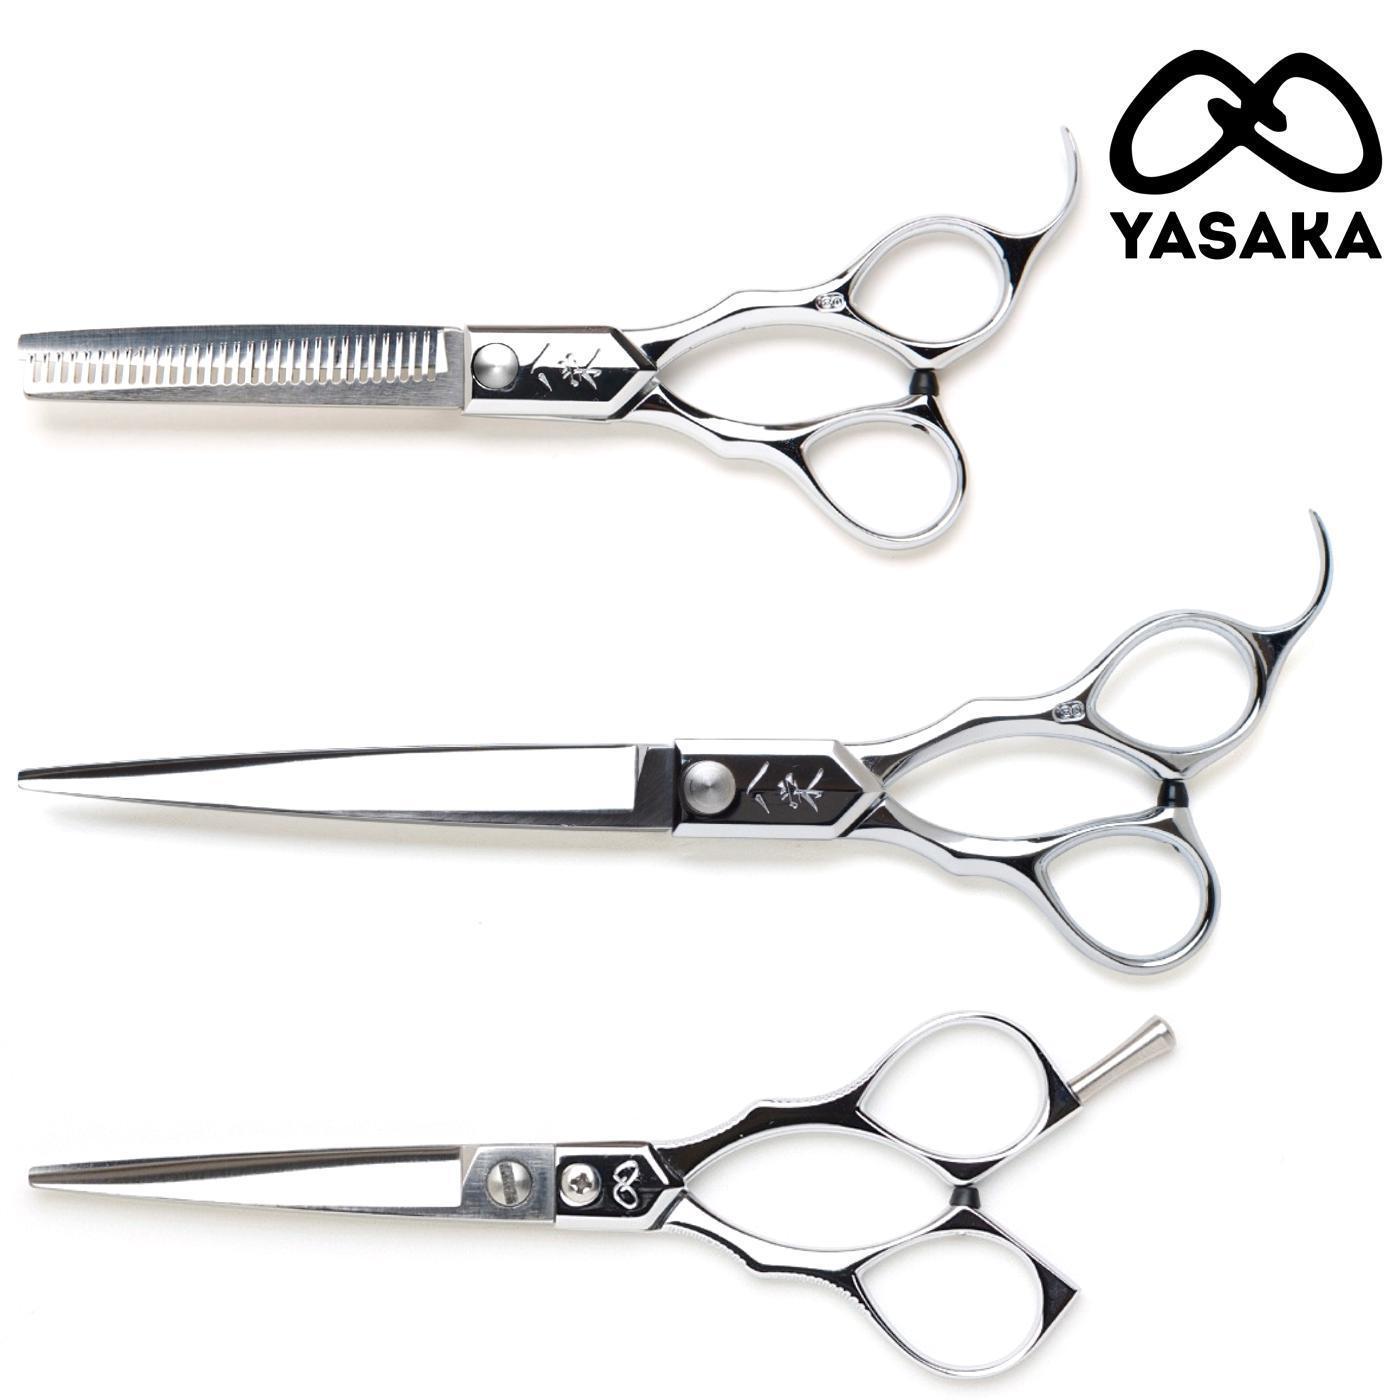 Yasaka Barber Scissors 3pc Master Set - Japan Scissors USA